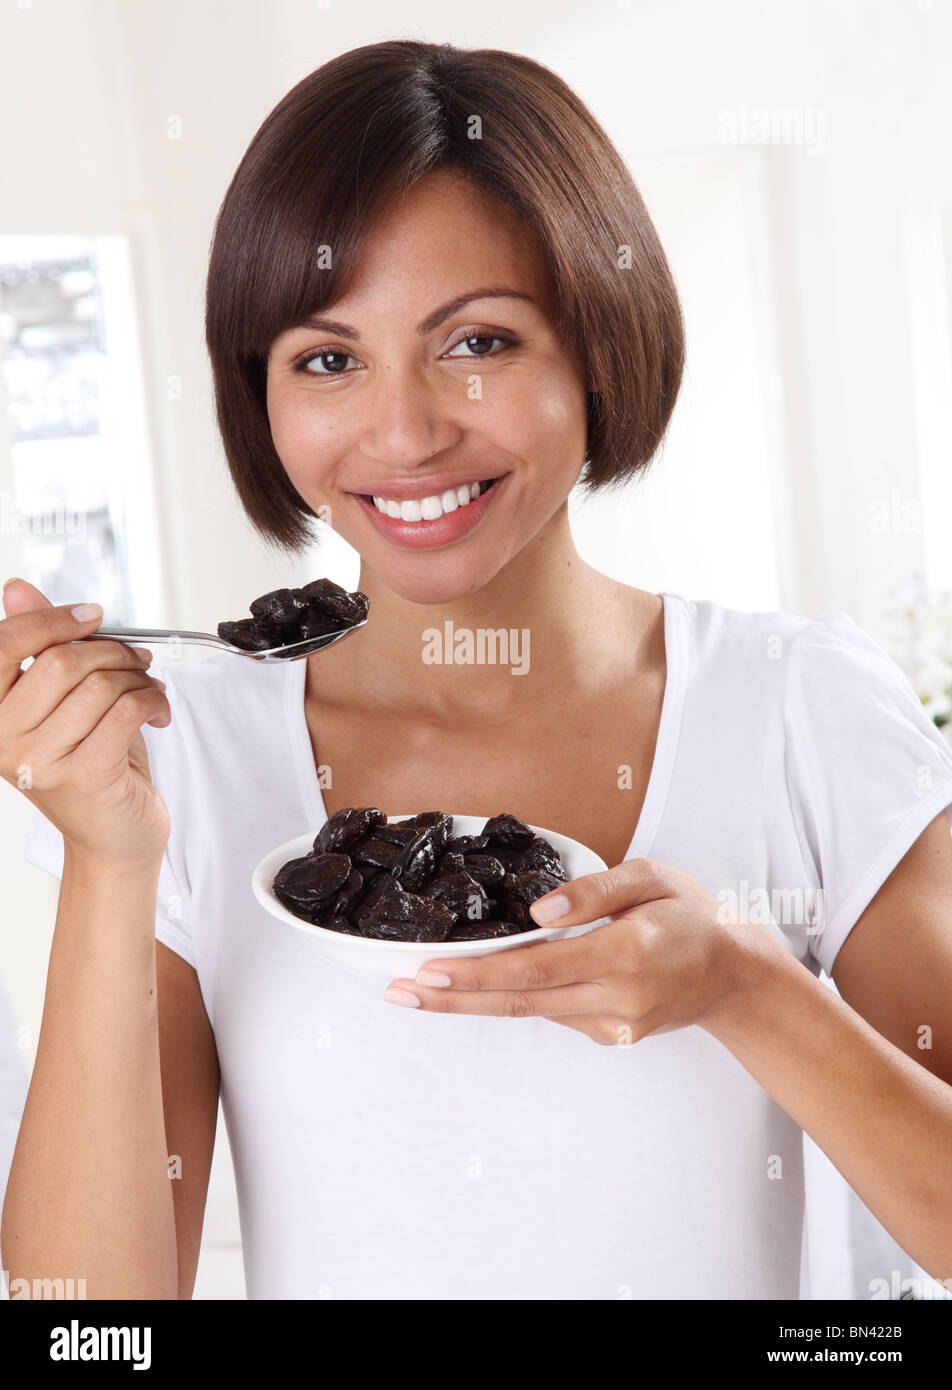 WOMAN EATING PRUNES Stock Photo